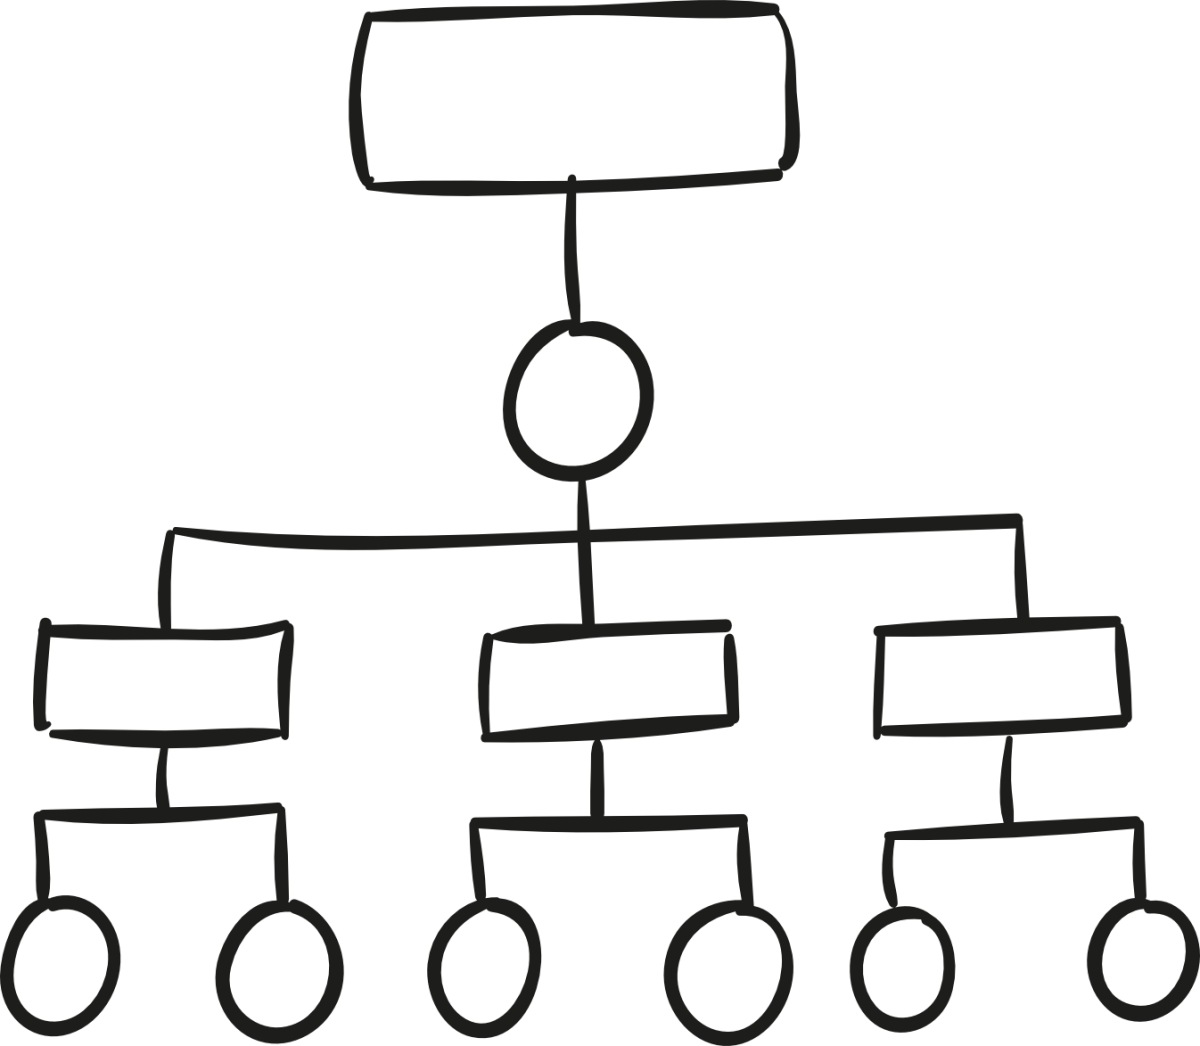 Структура рисунки. Организационная структура рисунок. Организационная структура на белом фоне. Иерархия рисунок. Структура компании шаблон.